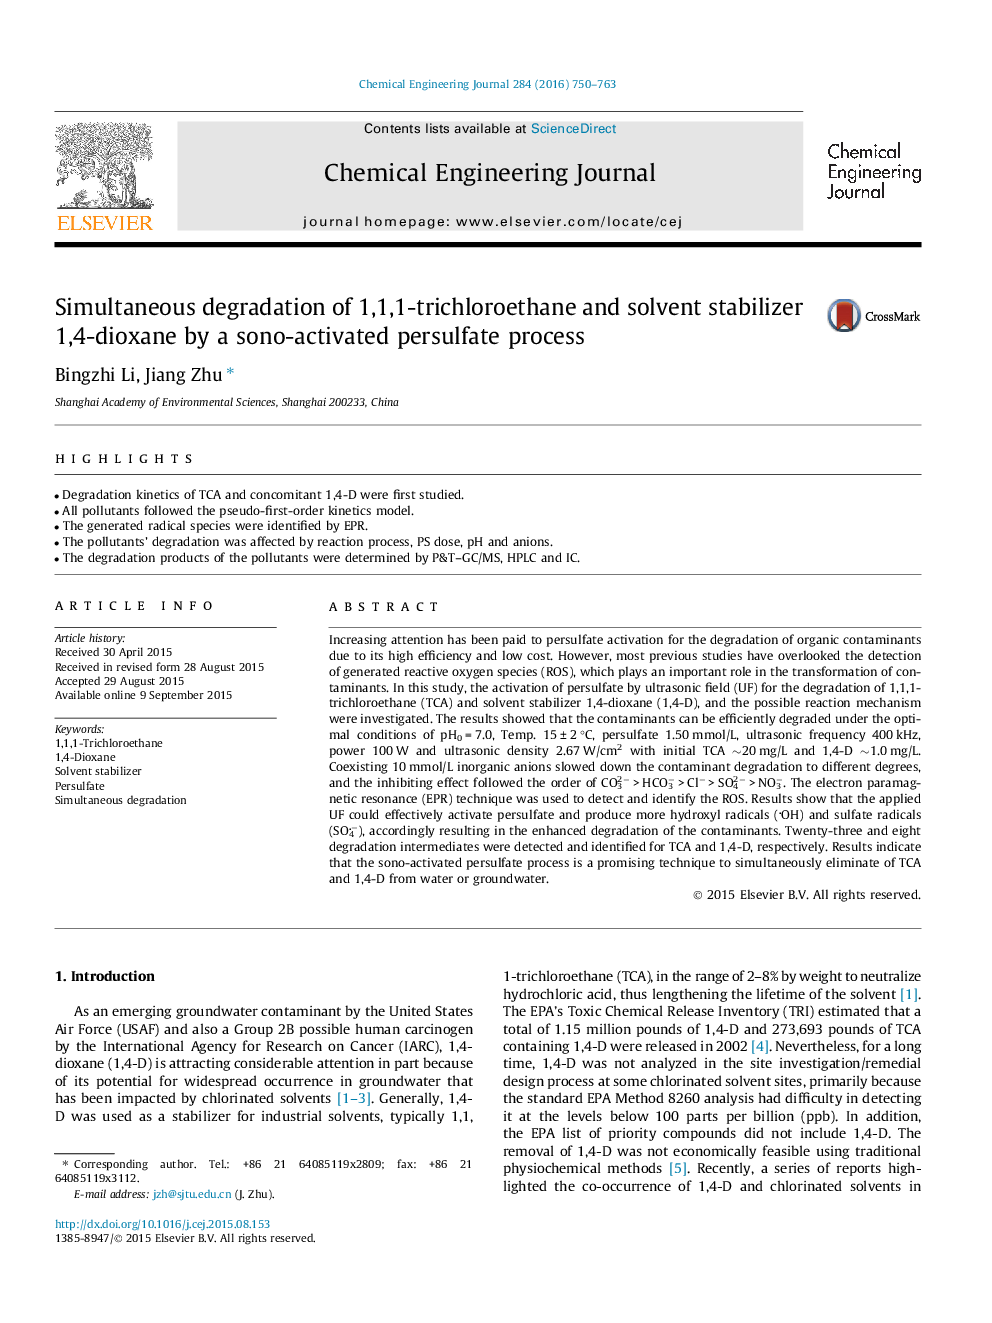 تخریب همزمان 1،1،1-تریکلروتان و تثبیت کننده حلال 1،4-دیوکسان توسط پروسسولفات سونو فعال 